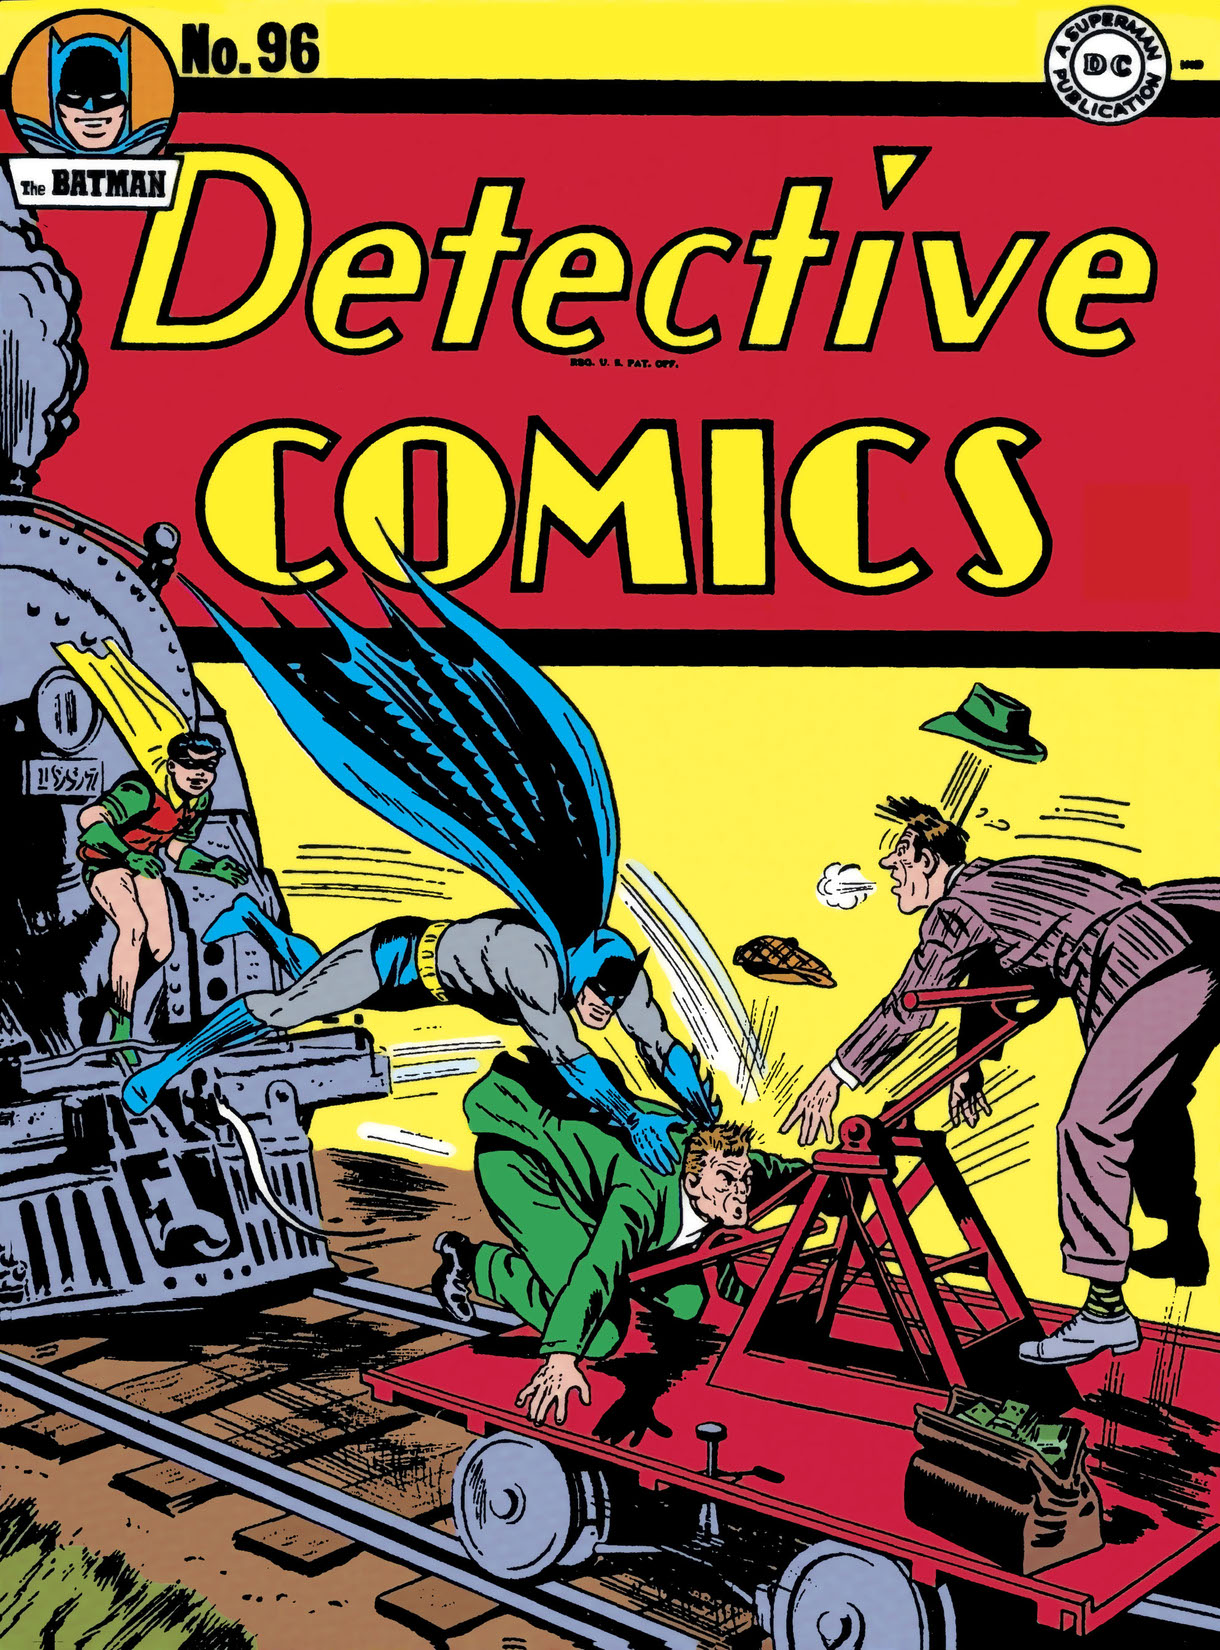 Detective Comics (1937-) #96 preview images